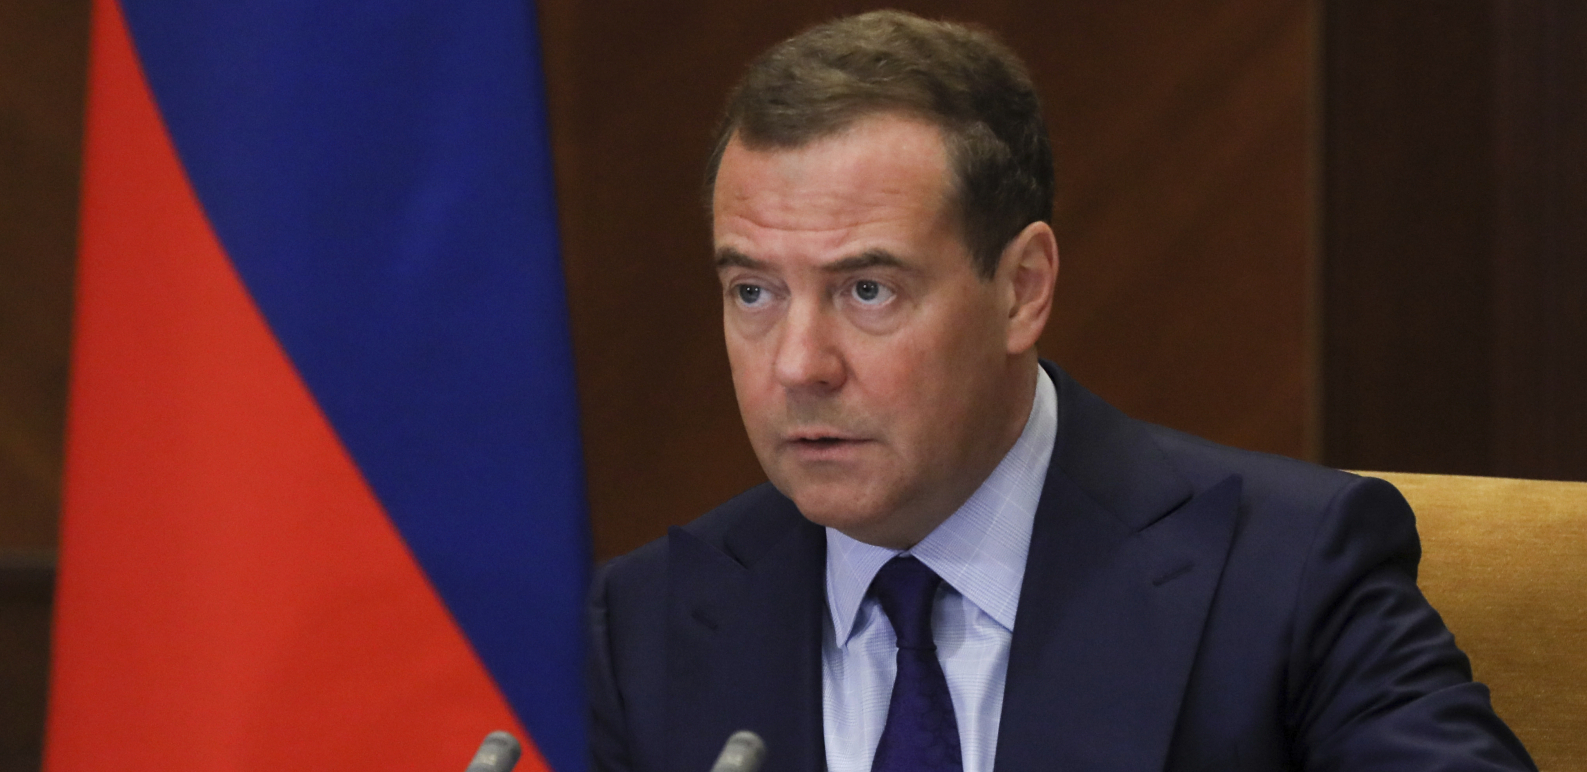 "VREME JE DA UPOTREBIMO ZABRANJENO ORUŽJE" Medvedev pobesneo posle izveštaja sa fronta, crvena linija je pređena